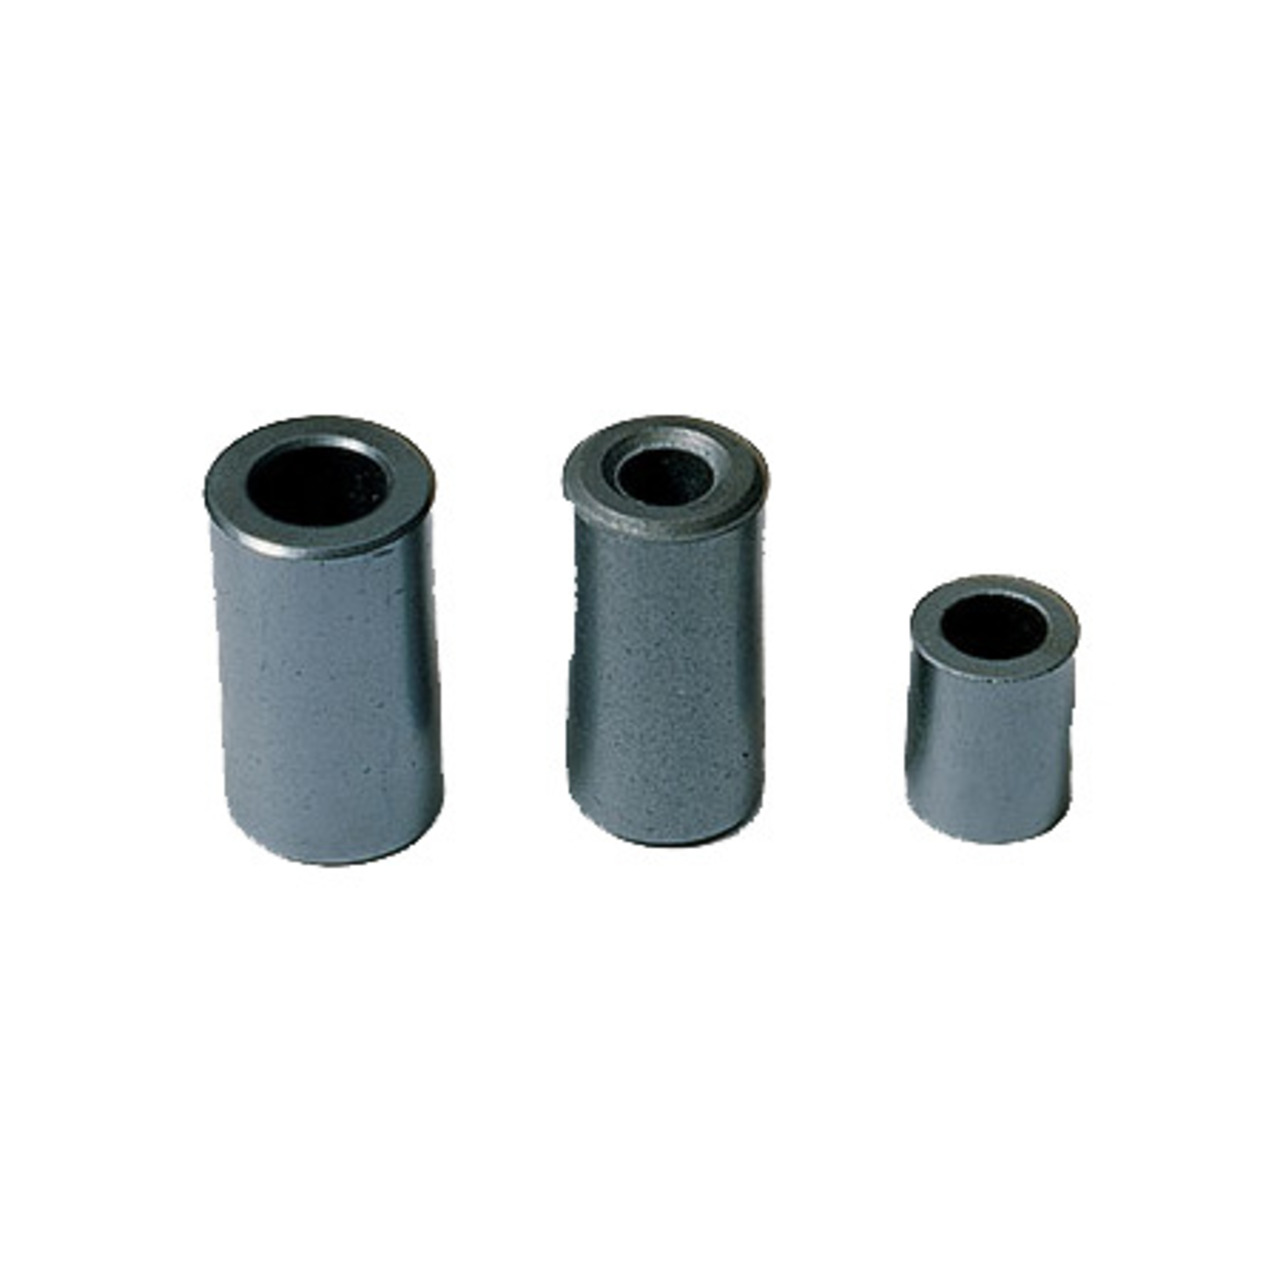 Zylinder-Ferrit-Ringkern- 28-5 mm lang- RI14-2-28-5-6-4